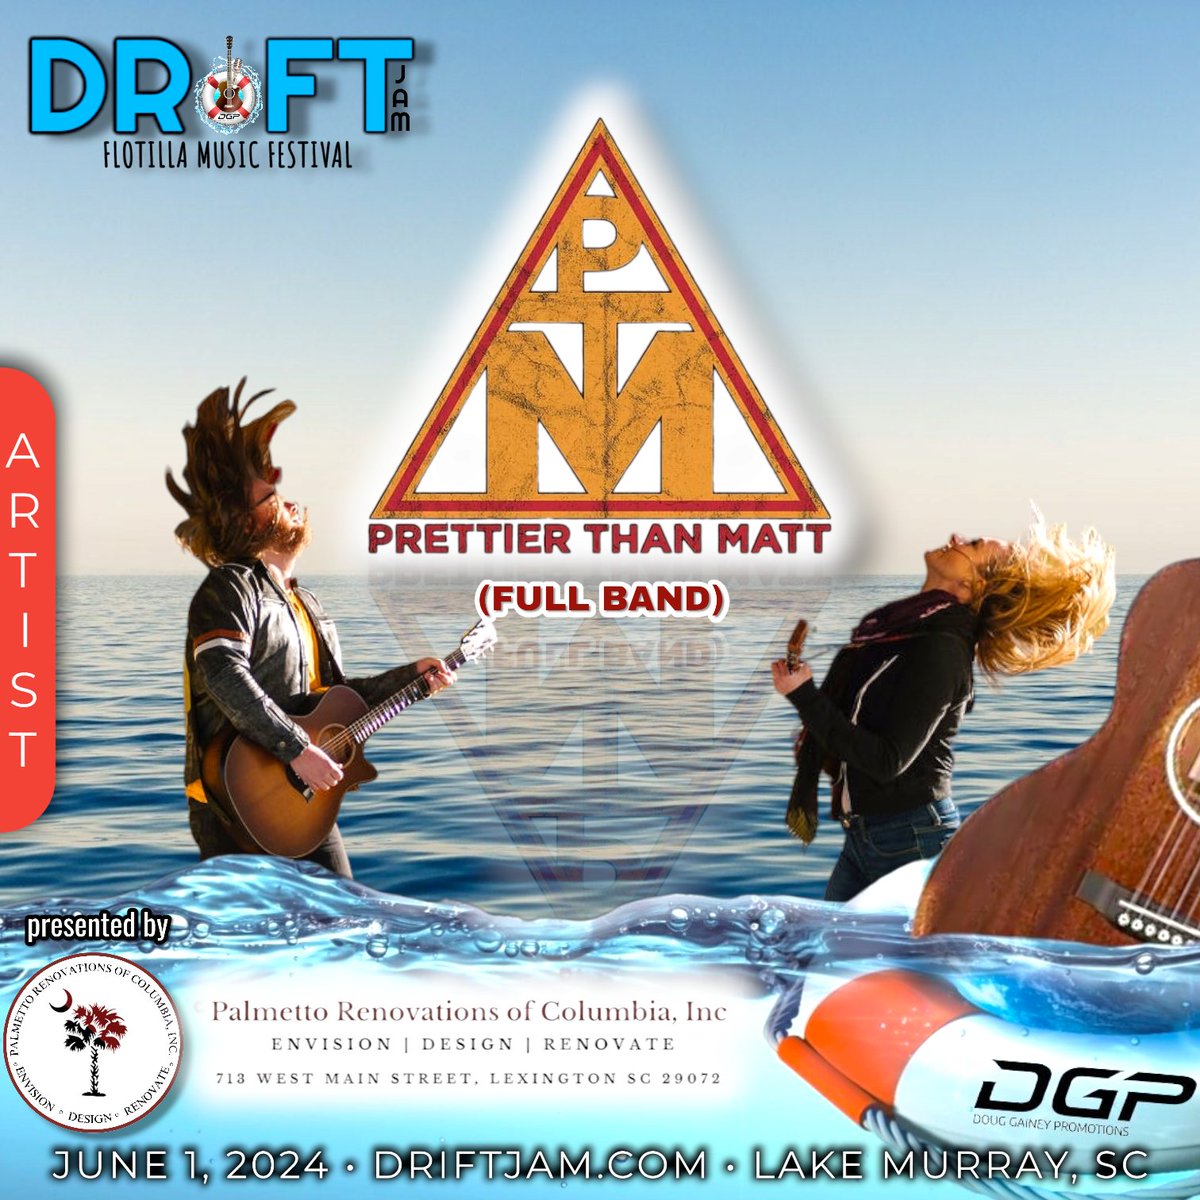 📣 Artist Announcement 📣
@PTMMusic (full band version) ➡️ #driftjam
.
.
#driftjam #driftjam2024 #FloatingFestival #MusicOnWater #FinalYear #SafeSailing #MusicCharity #LastChance #FOMO #BoatLife #LastCallOnTheLake